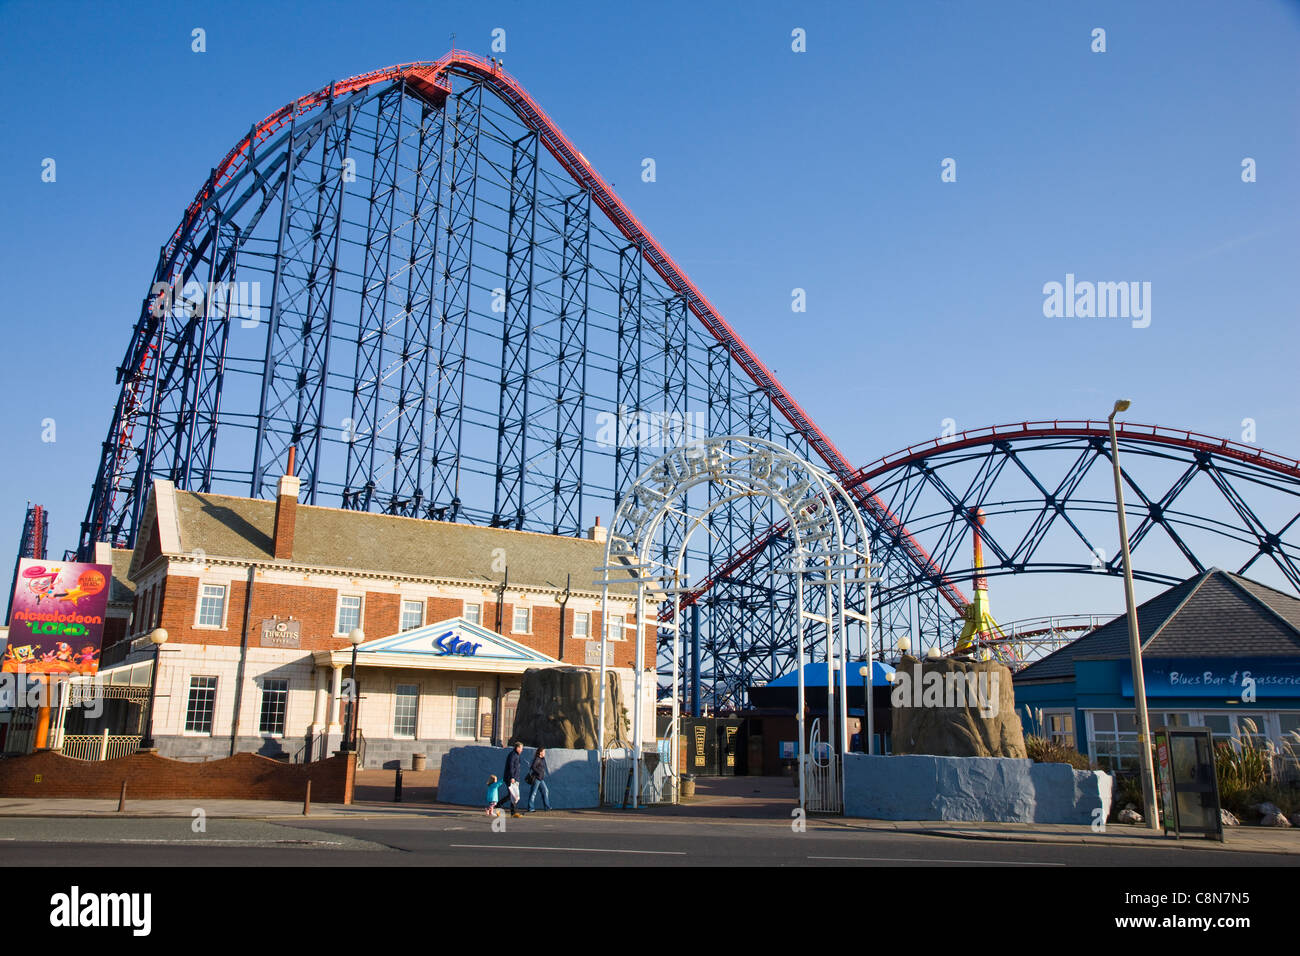 The Big One roller coaster in Blackpool's Pleasure Beach, Blackpool, UK Stock Photo